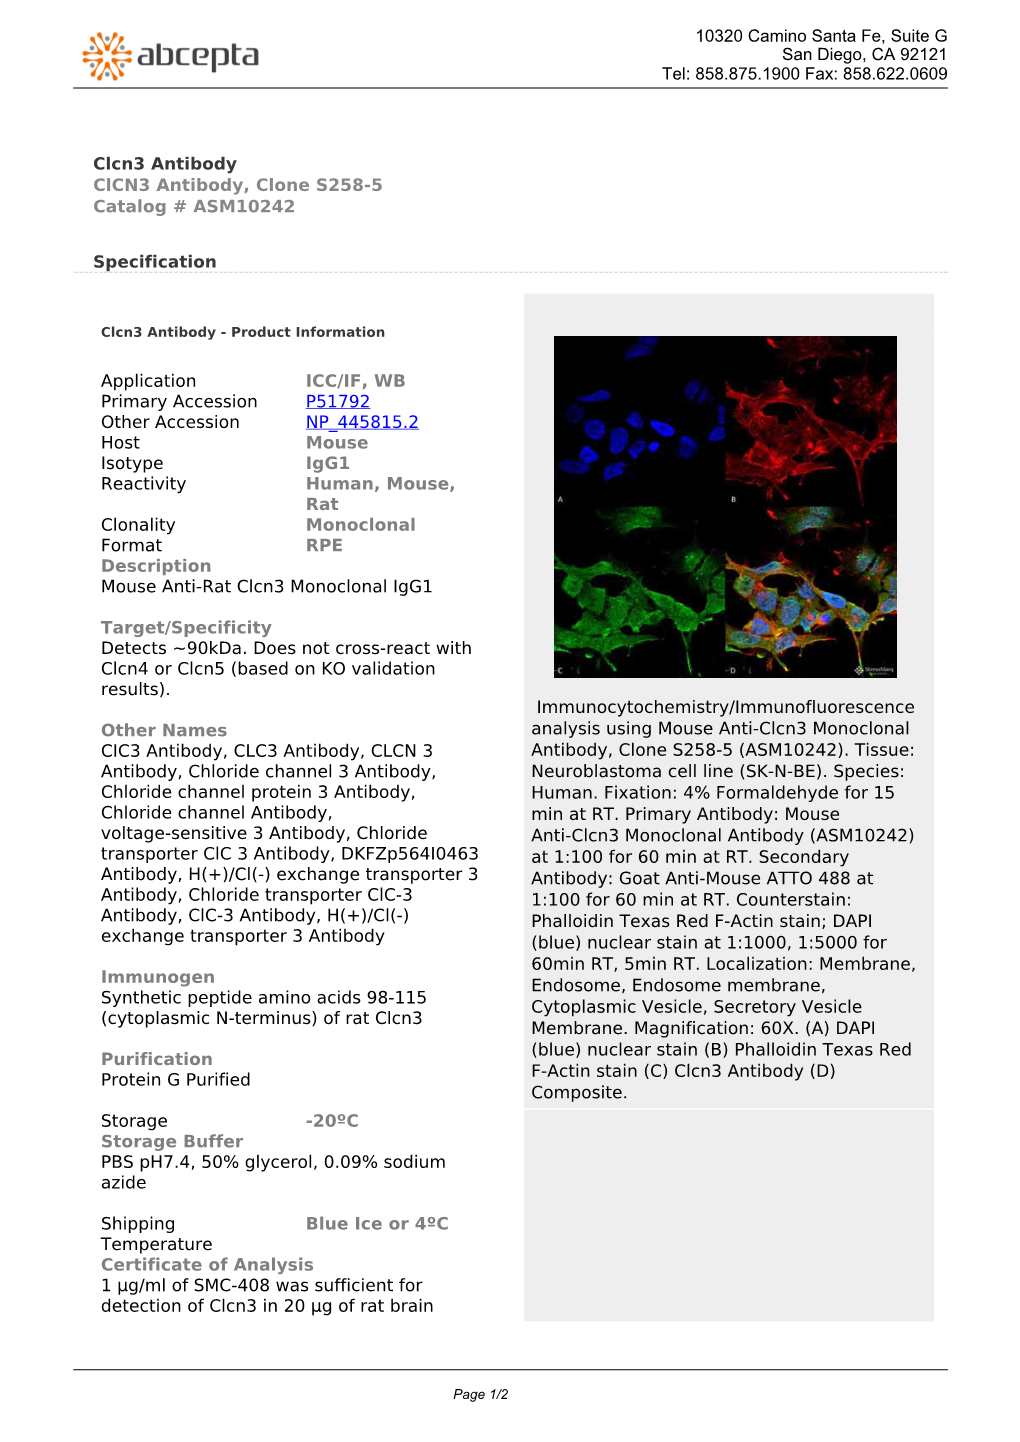 Clcn3 Antibody Clcn3 Antibody, Clone S258-5 Catalog # ASM10242